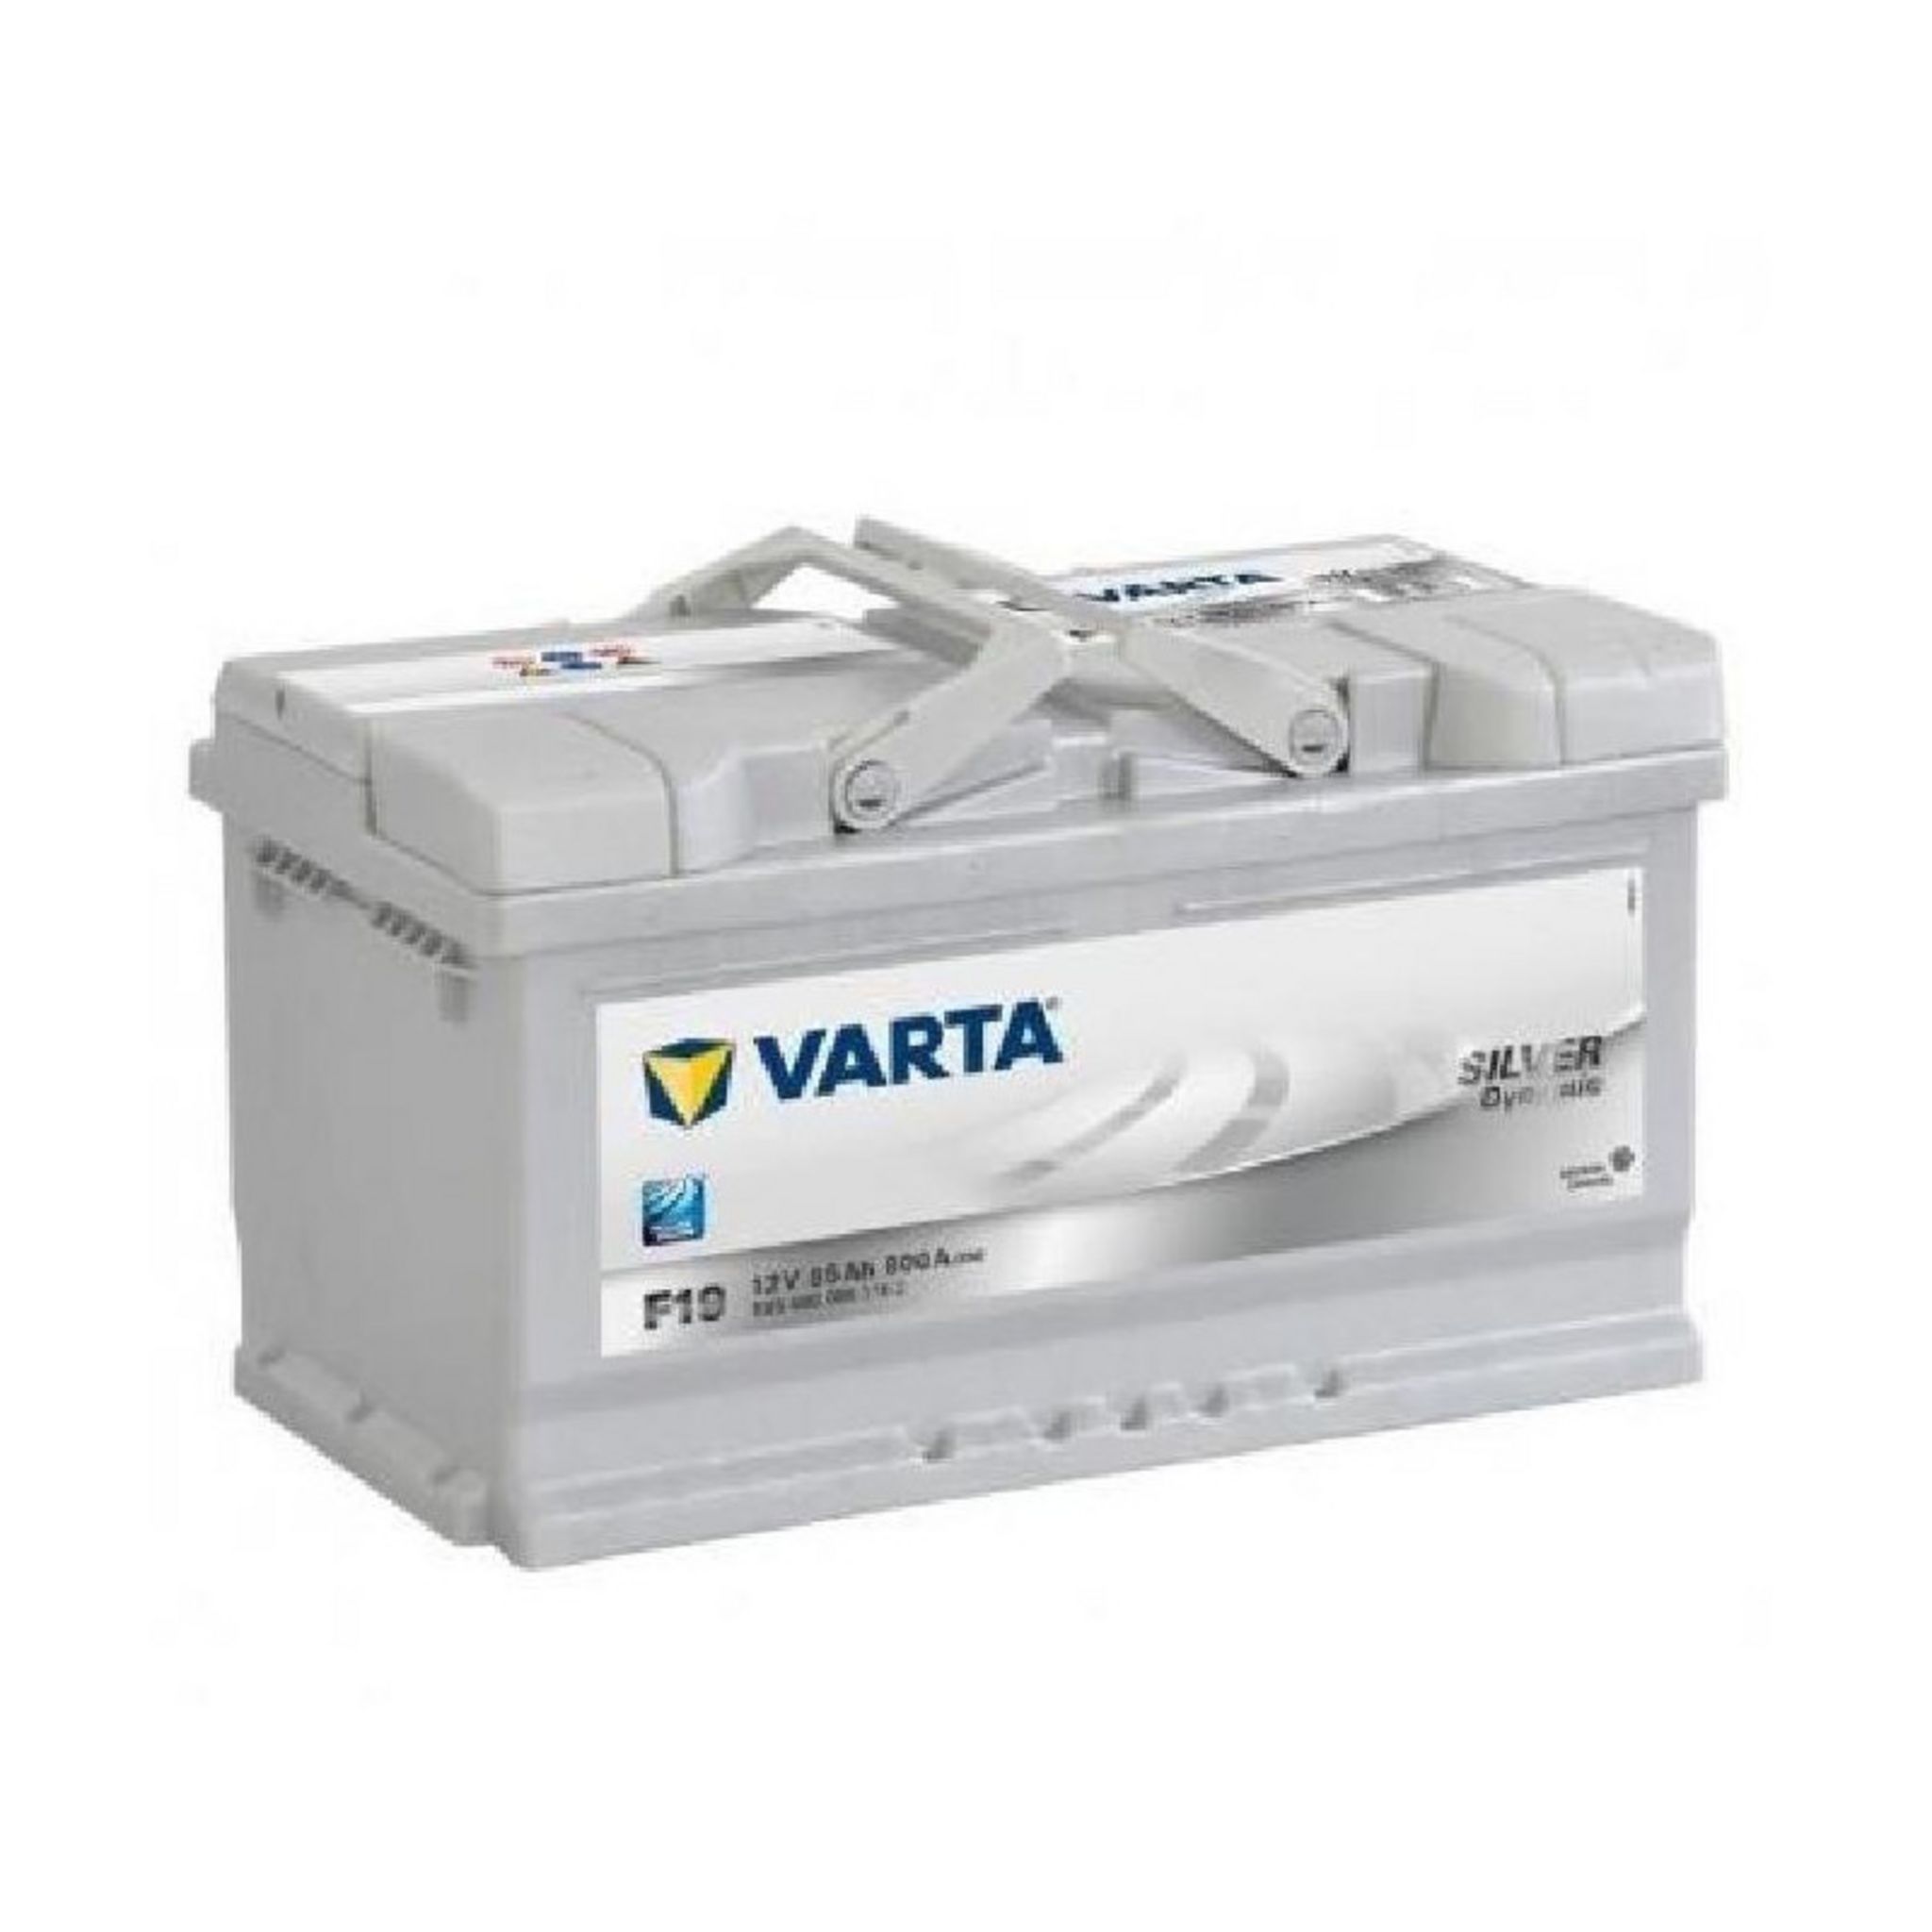 Varta Batterie Varta Silver Dynamic F19 12v 85ah 800A 585 400 080 pas cher  